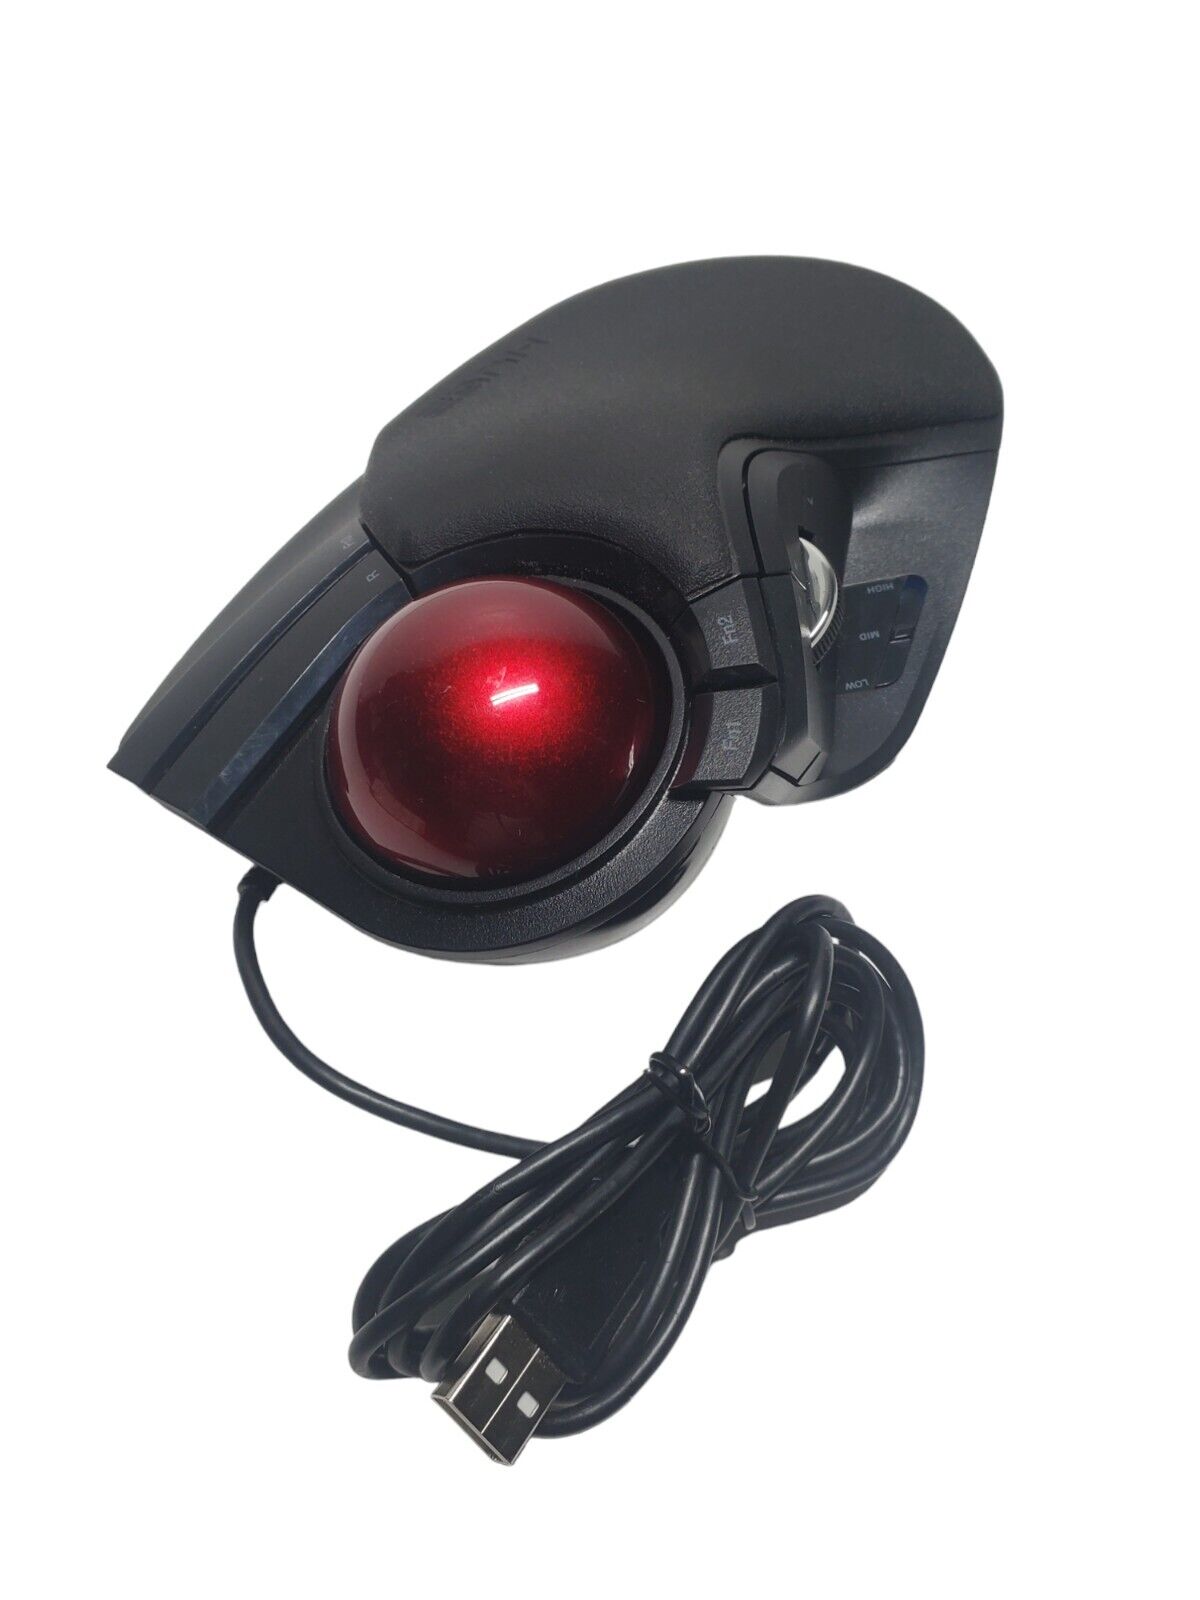 ELECOM Trackball Mouse Wired 8 Button M-HT1URBK Black